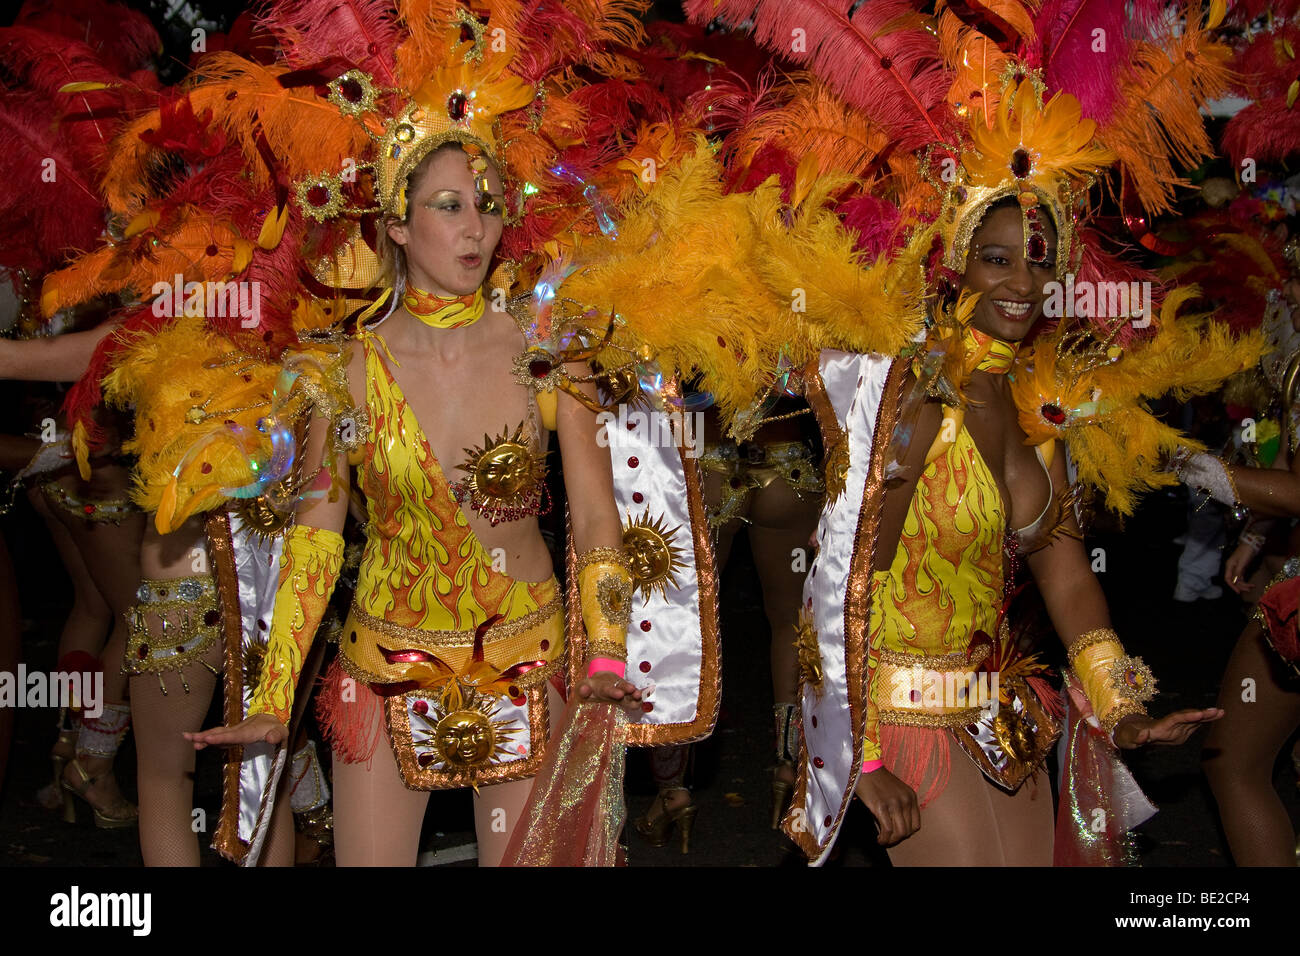 https://c8.alamy.com/comp/BE2CP4/brasil-brazilian-peacock-costume-samba-dancer-ethnic-thames-festival-BE2CP4.jpg